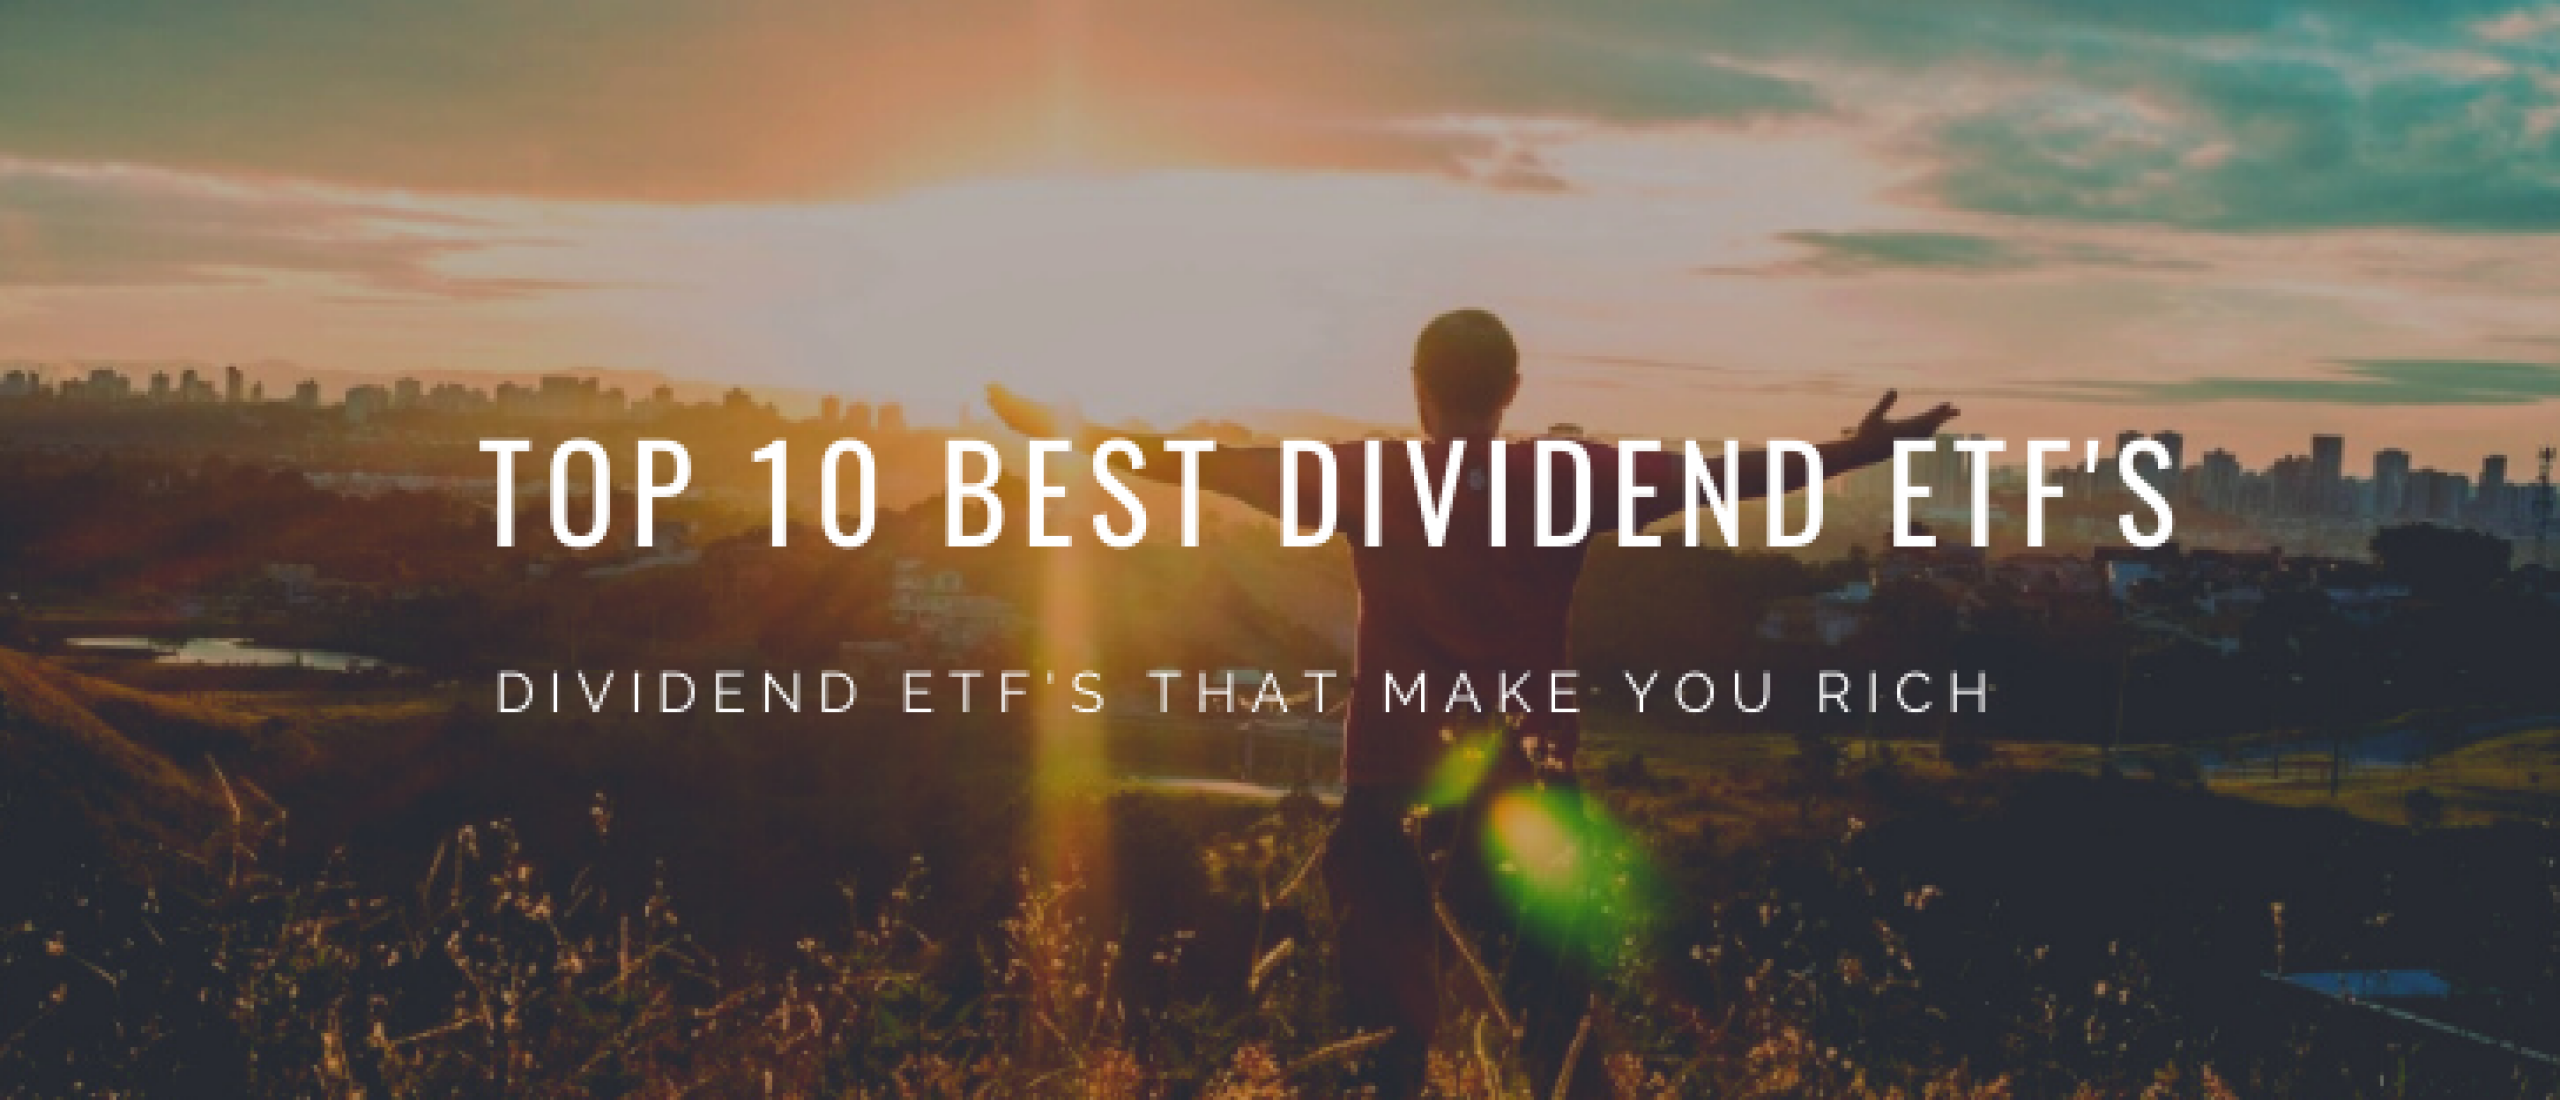 TOP 10 Best Dividend ETFs for Dividend (and Value) Investing